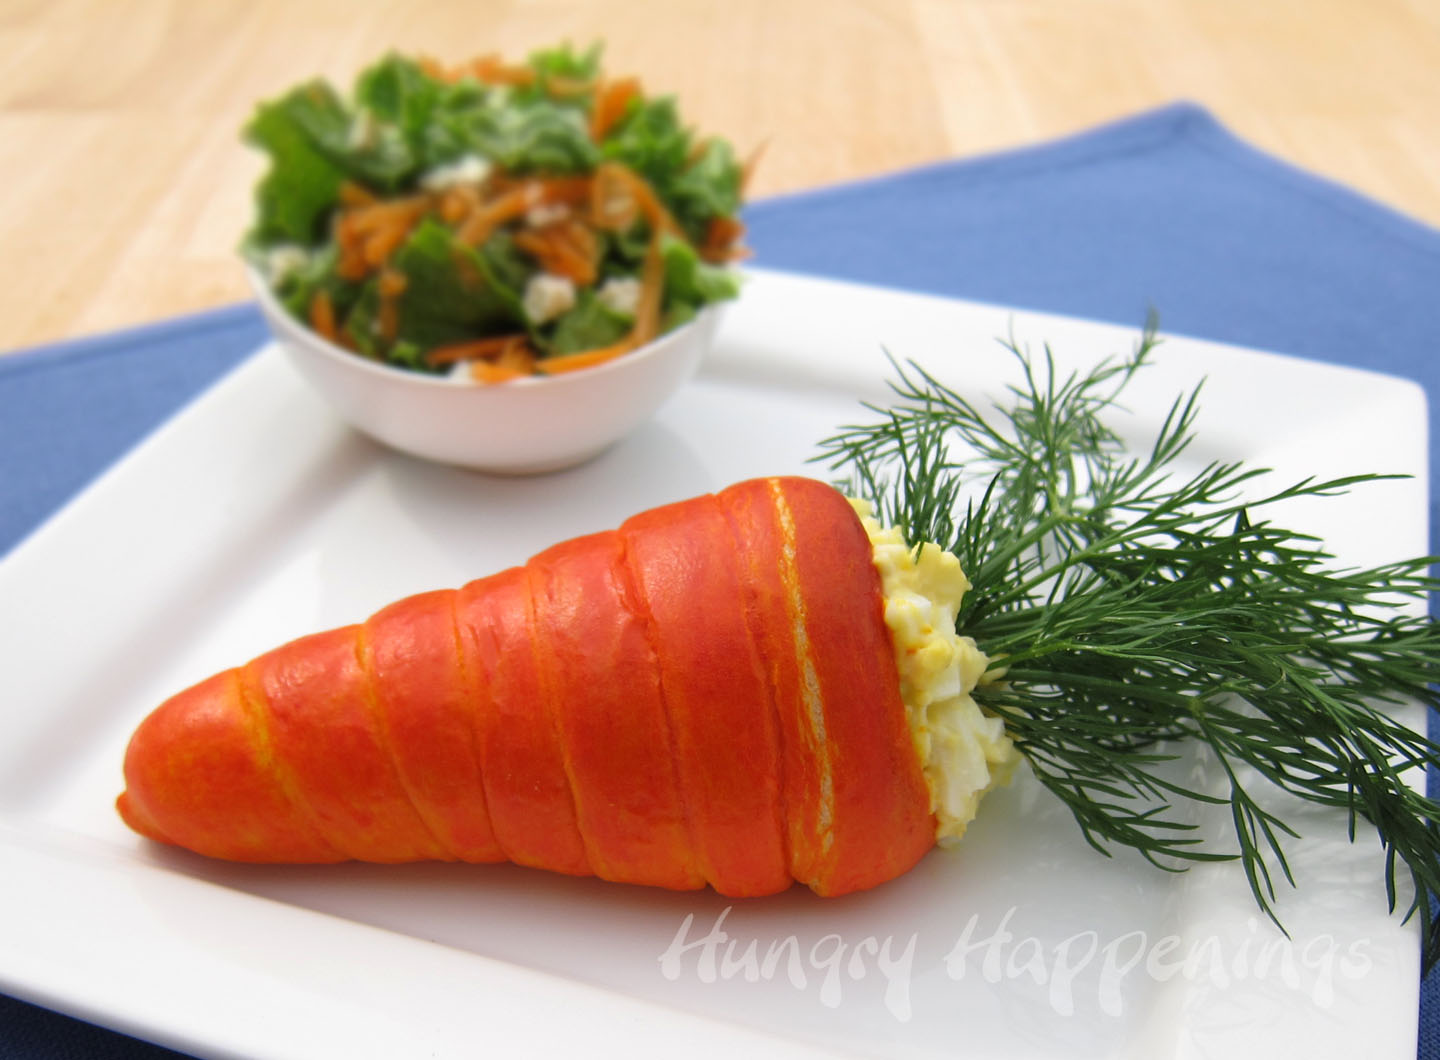 Fisher Price Fun with Food McDonald's salad garden Carrots veggies replacement 